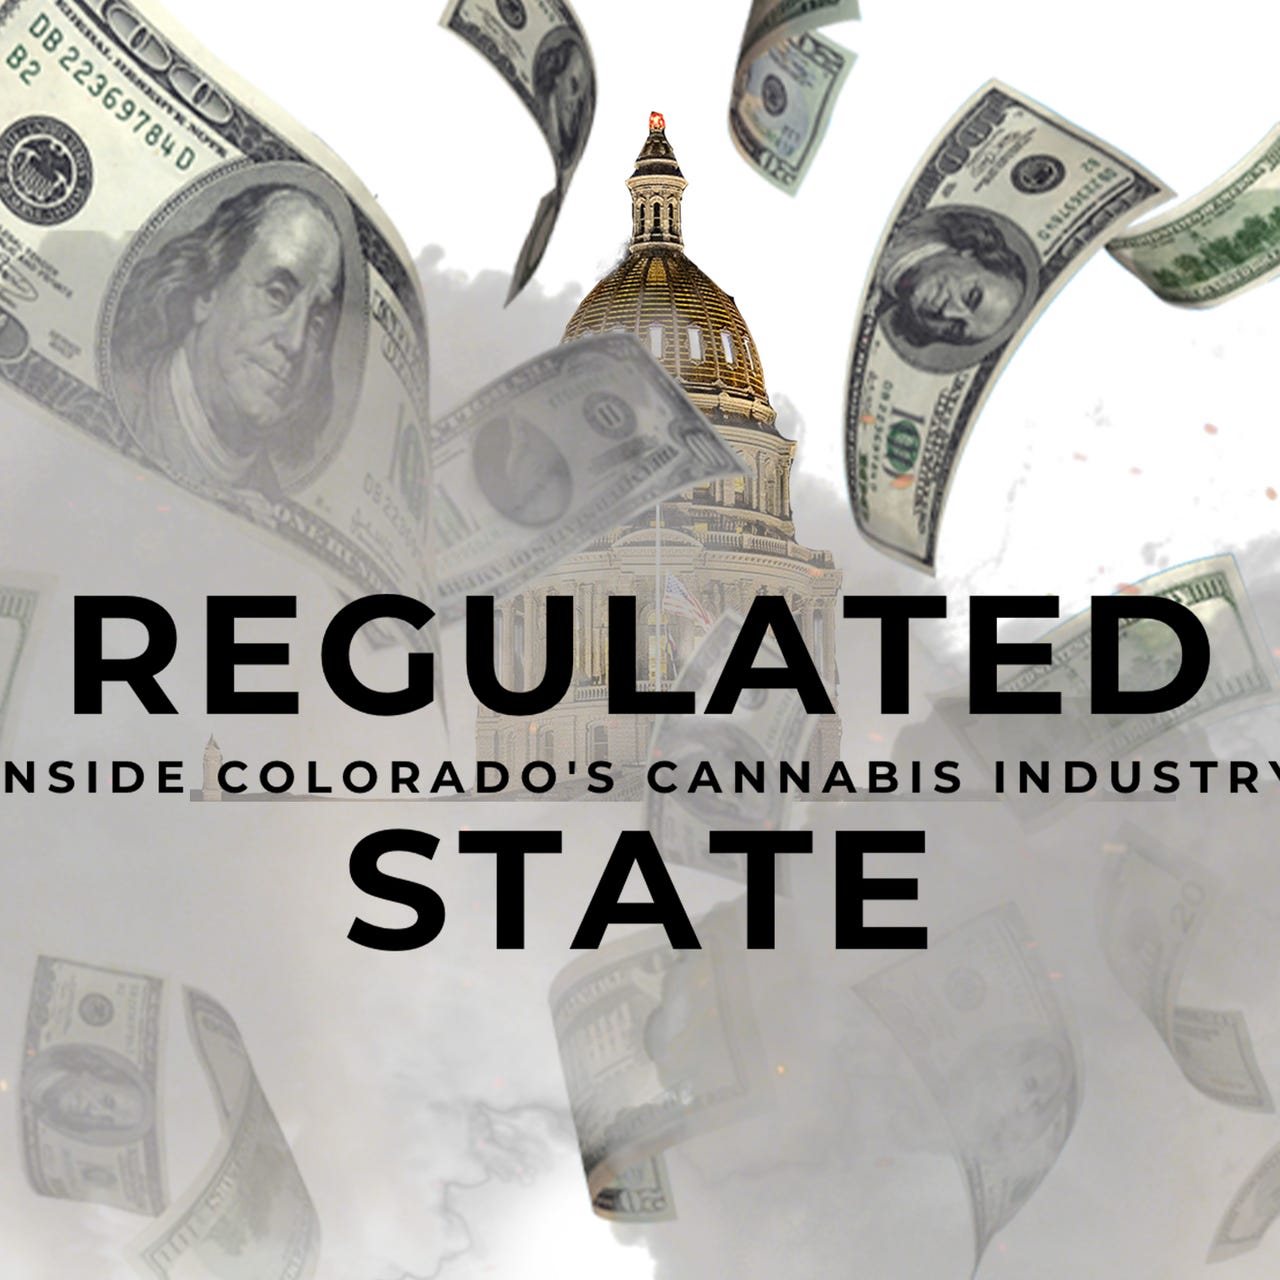 Regulated State